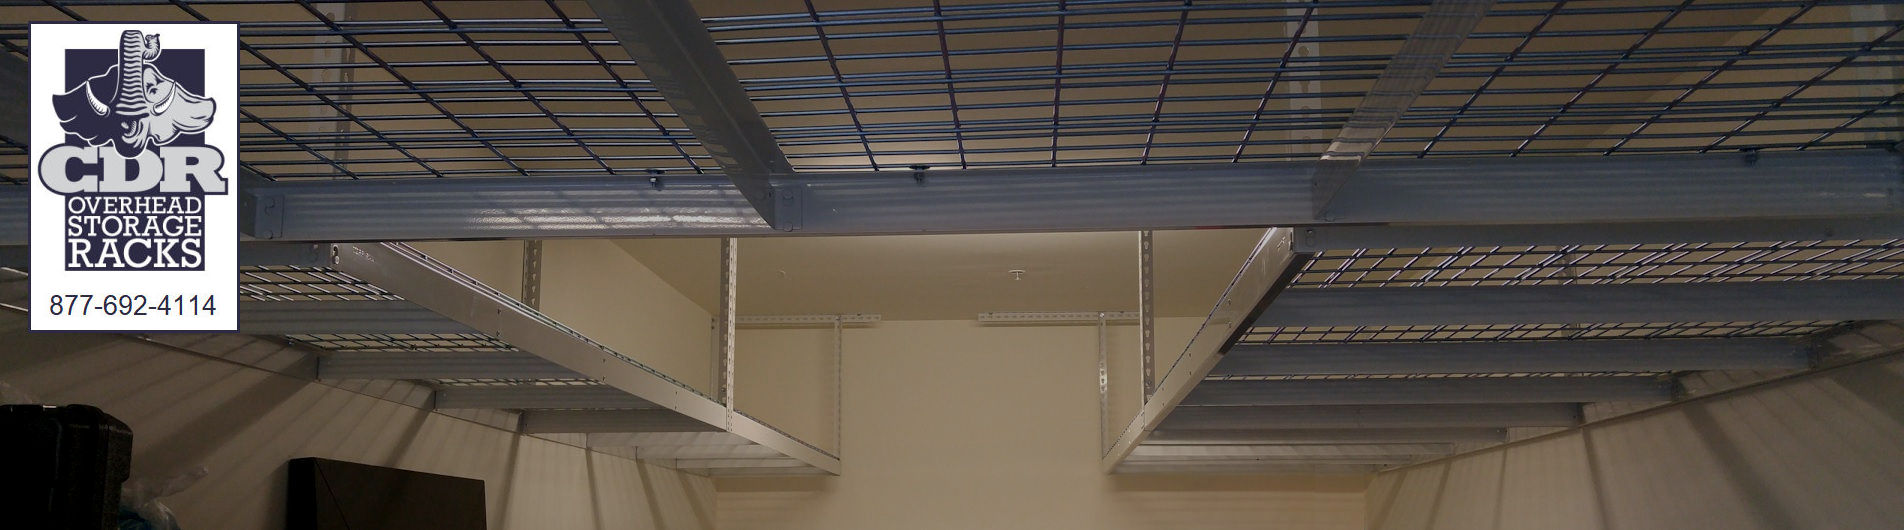 CDR Overhead Storage Racks - Camas WA - Garage Overhead Storage Rack Installation in Camas WA